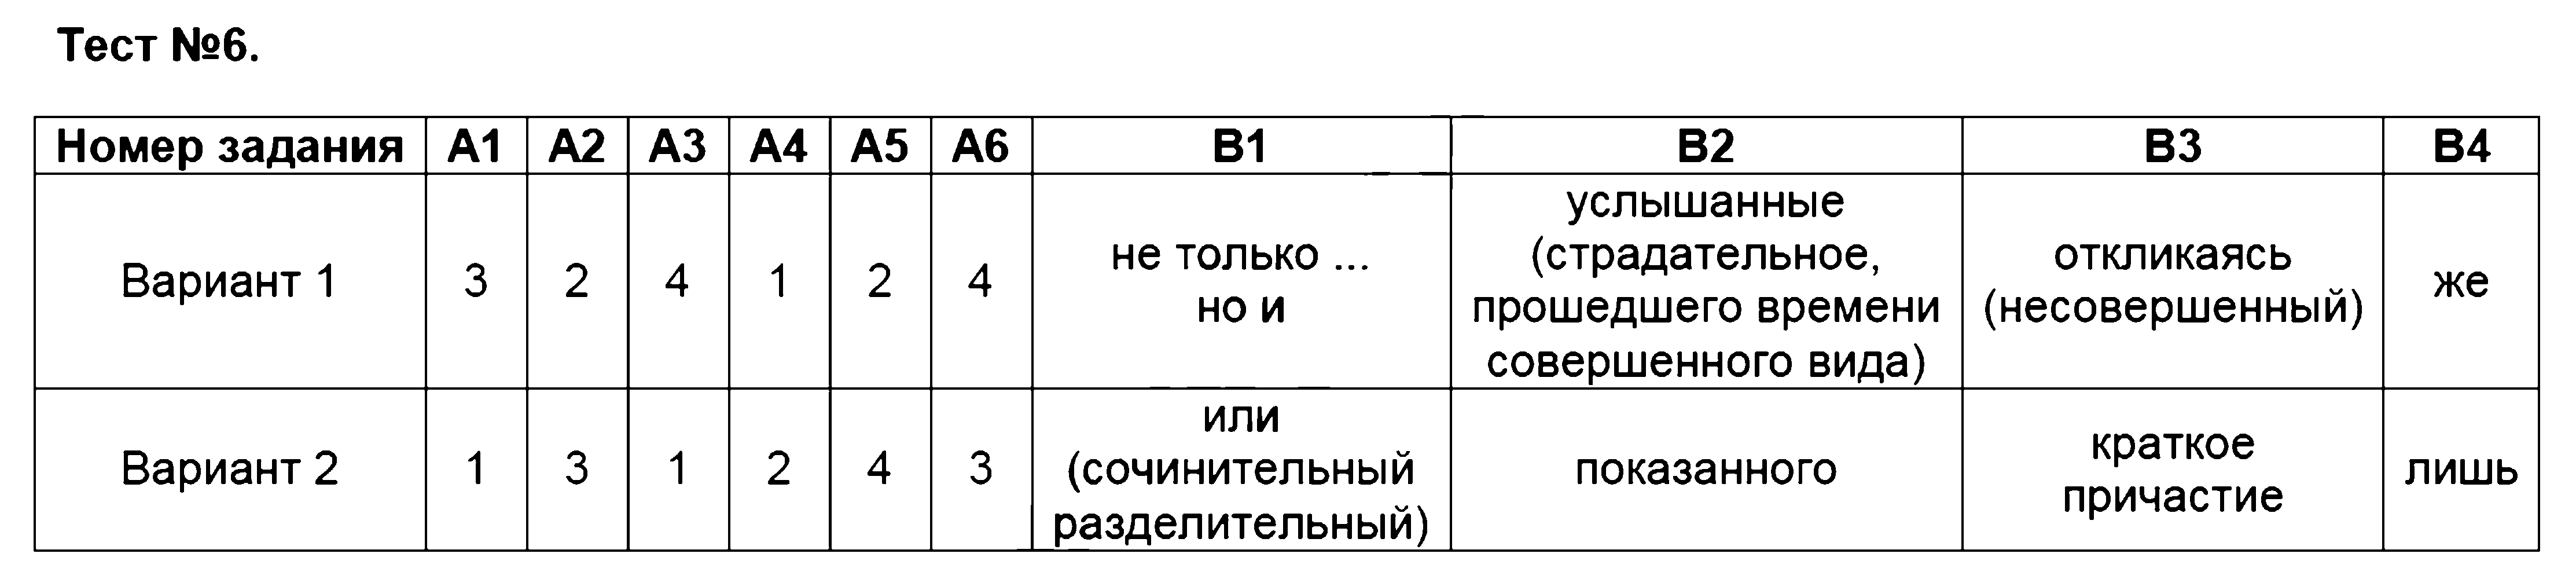 ГДЗ Русский язык 8 класс - Тест 6